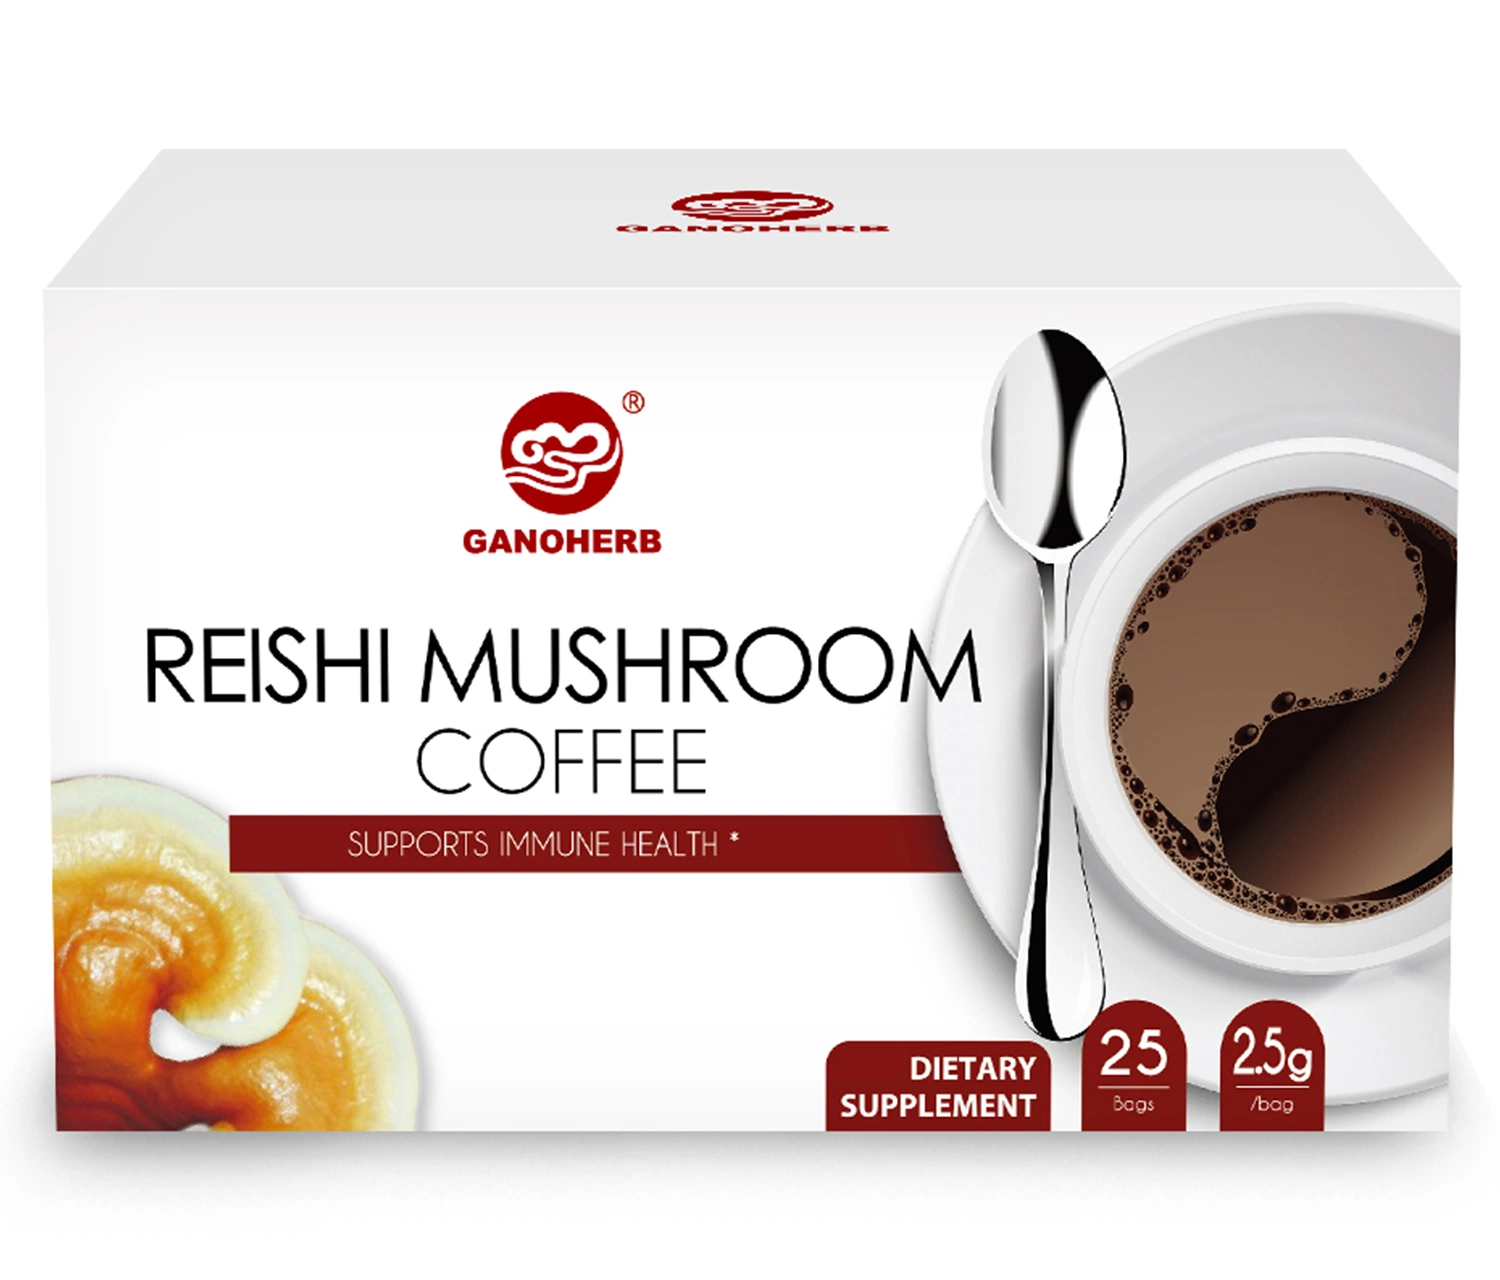 2 in 1 Reishi Black Coffee Mushroom Instant Coffee